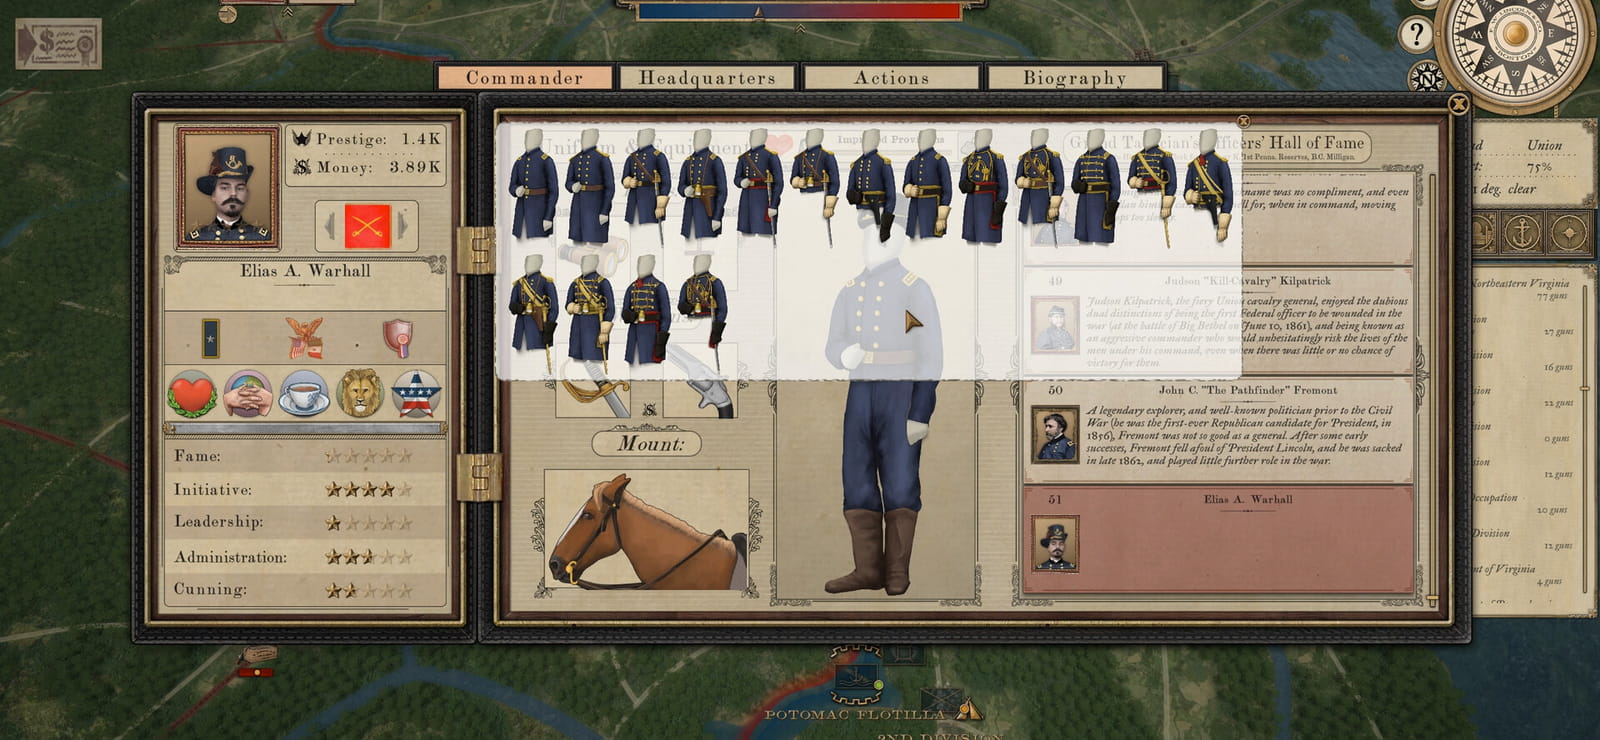 Grand Tactician: The Civil War - Whiskey & Lemons